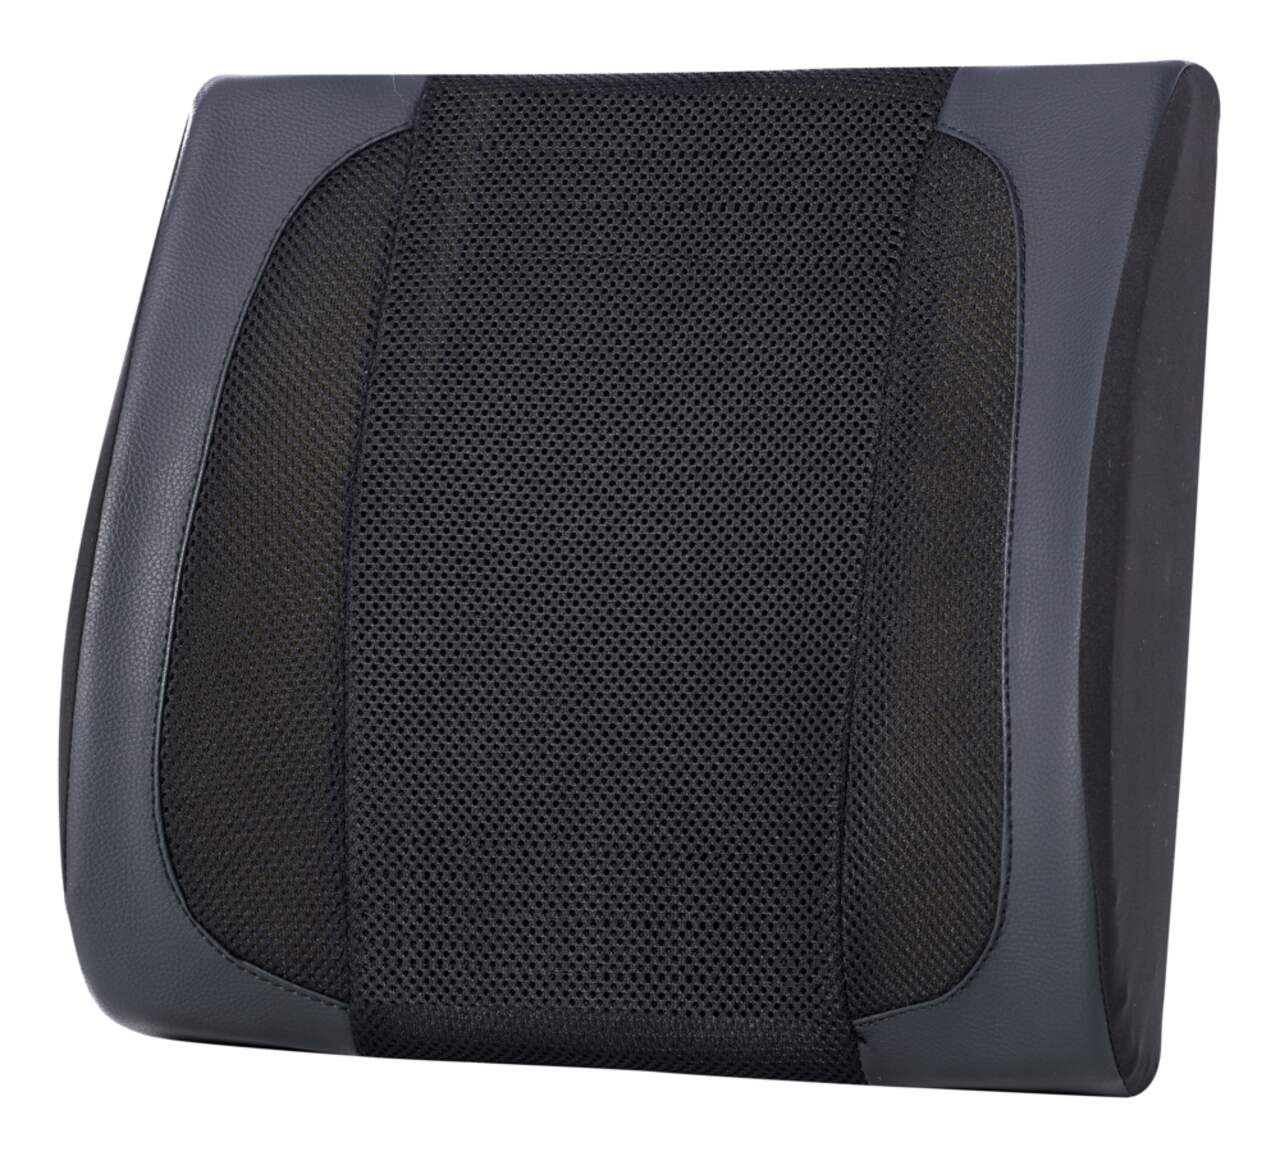 AutoTrends Premium Lumbar Lower Back Support Cushion